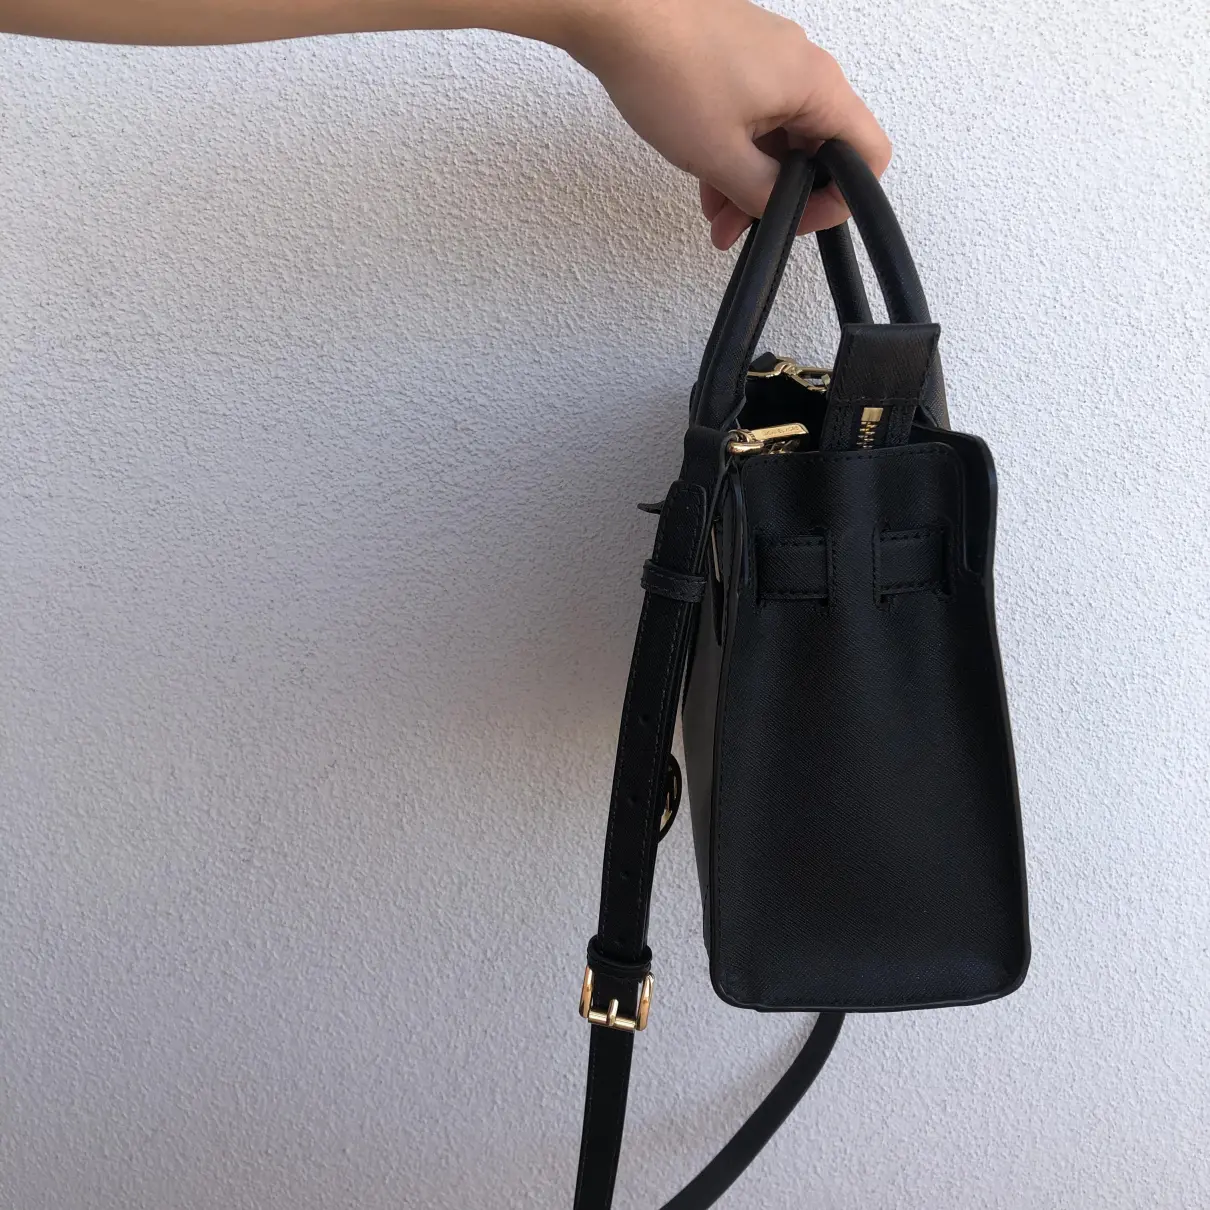 Buy Michael Kors Dillon leather handbag online